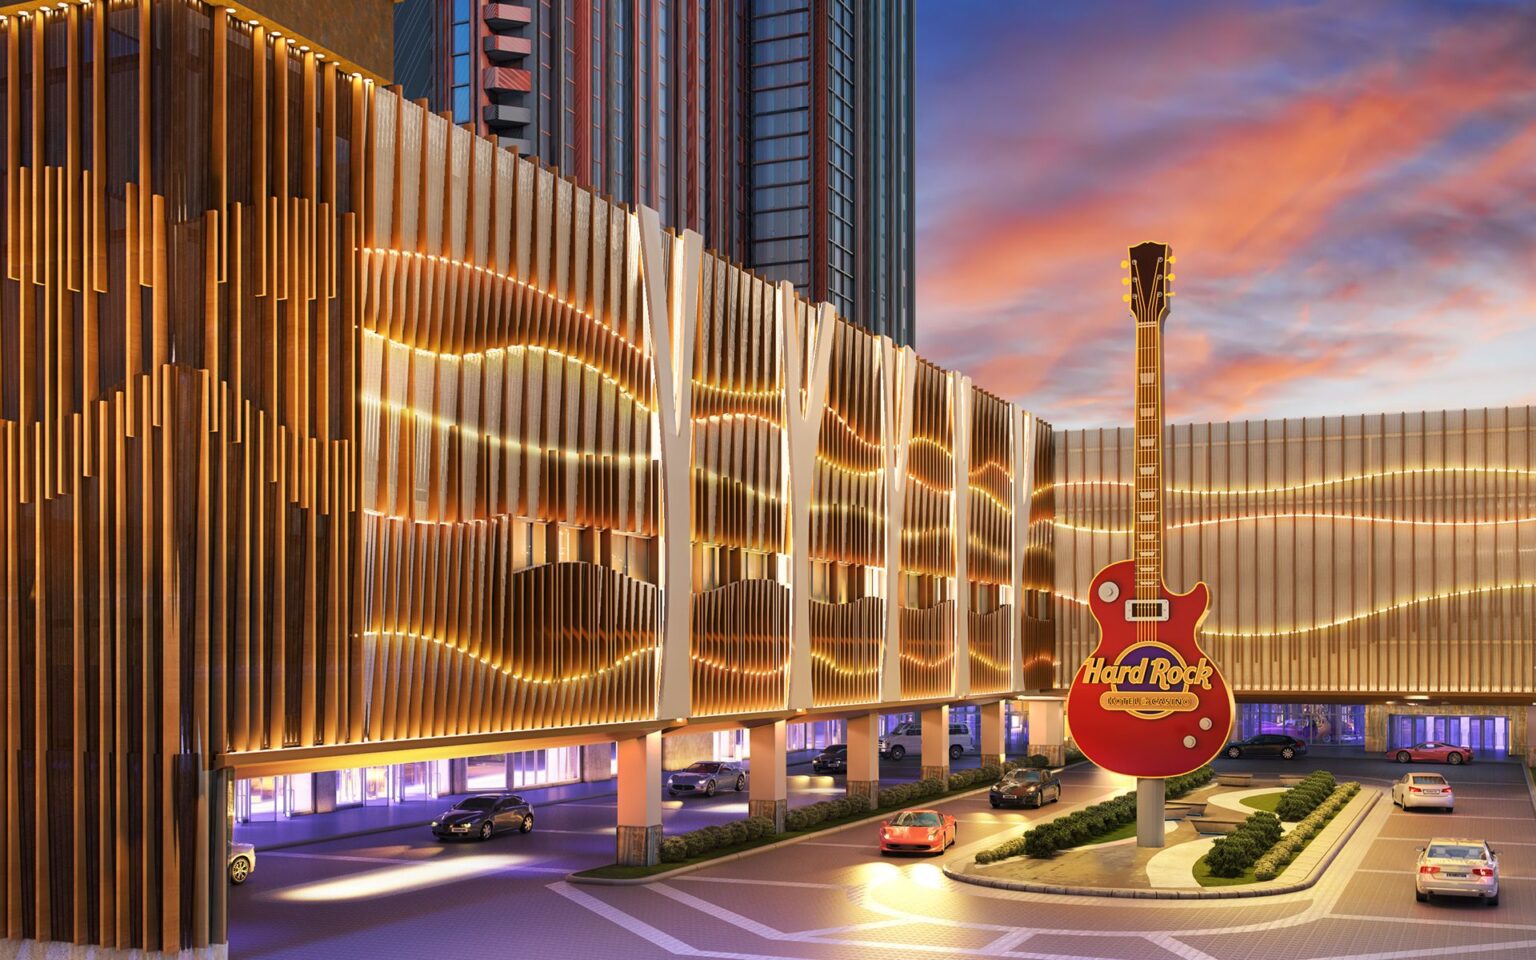 hard rock casino hotel atlantic city nj